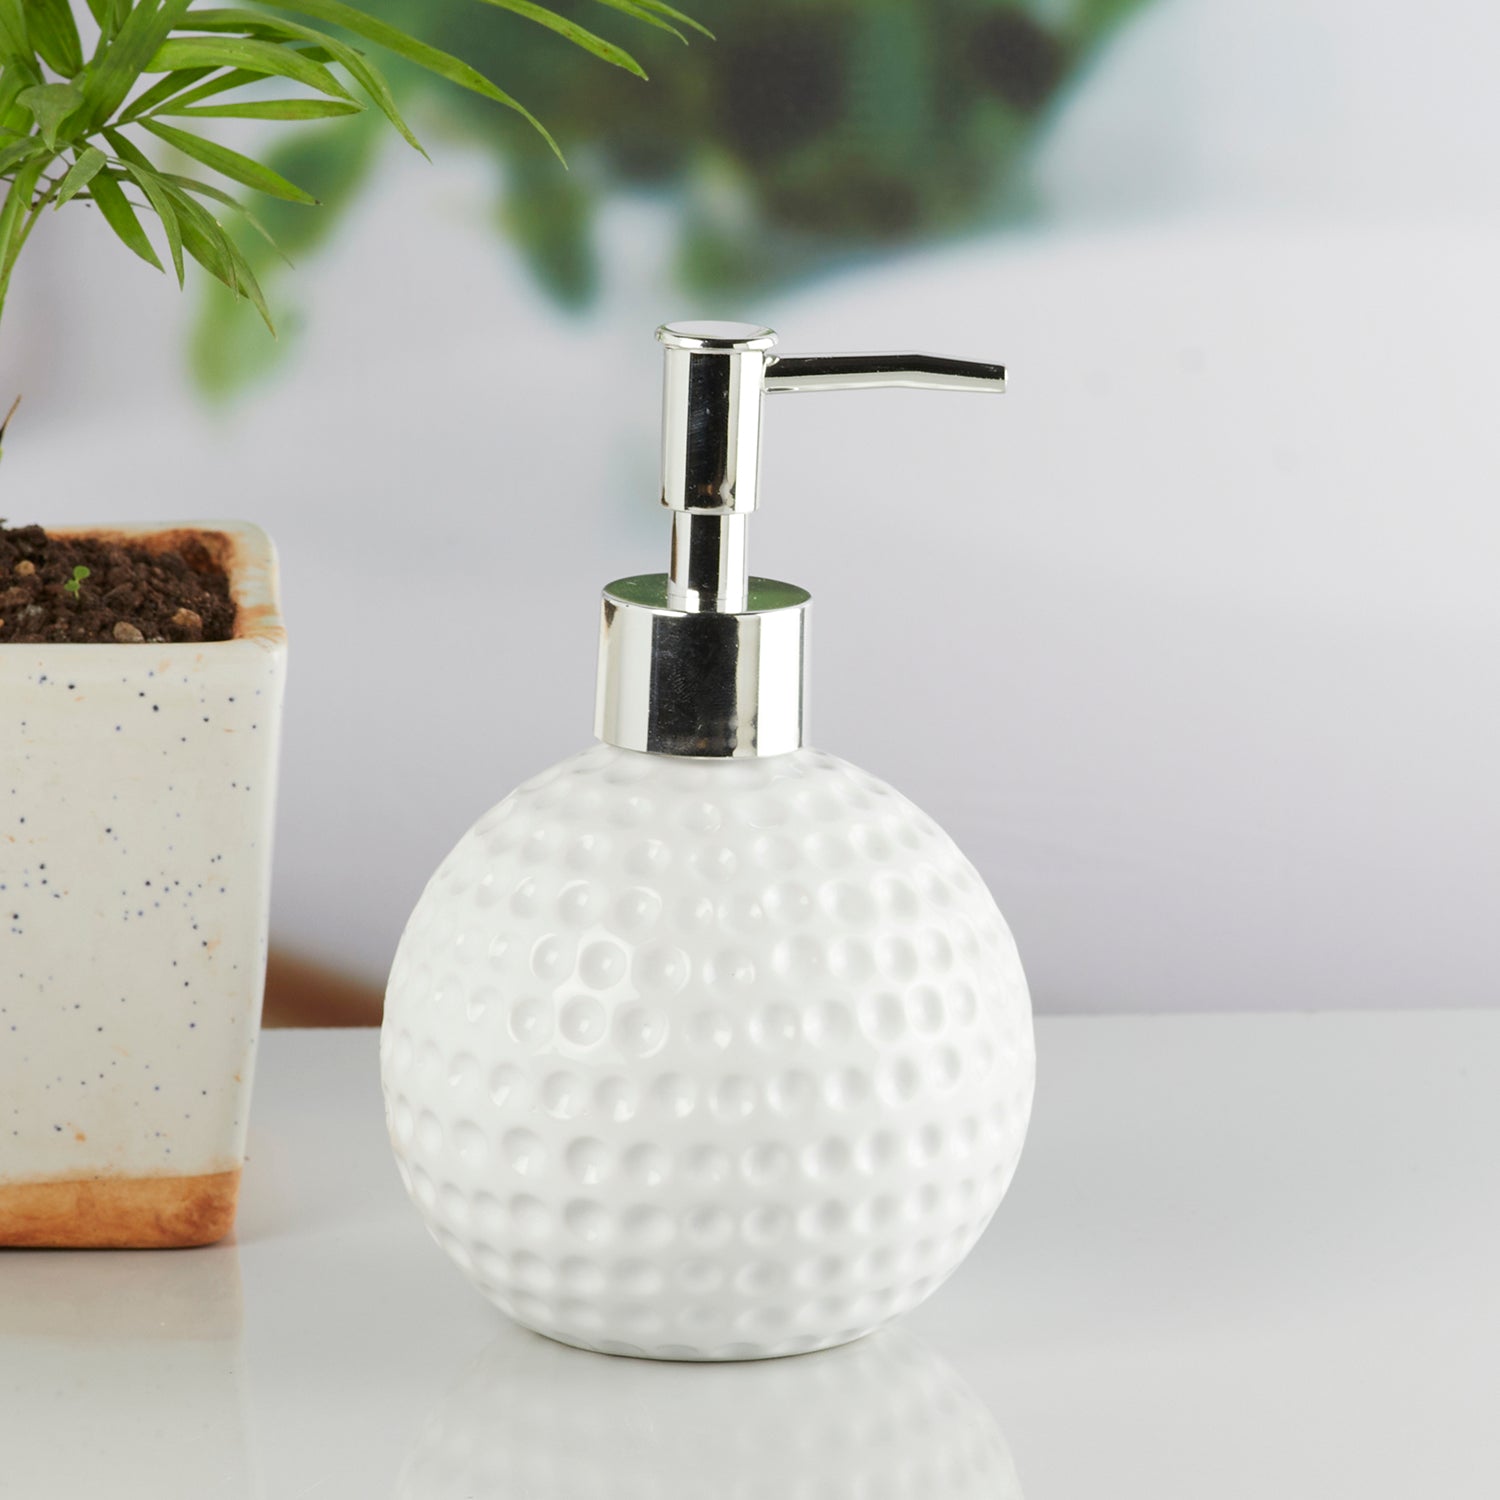 Kookee Ceramic Soap Dispenser for Bathroom handwash, refillable pump bottle for Kitchen hand wash basin, Set of 1, White (8653)